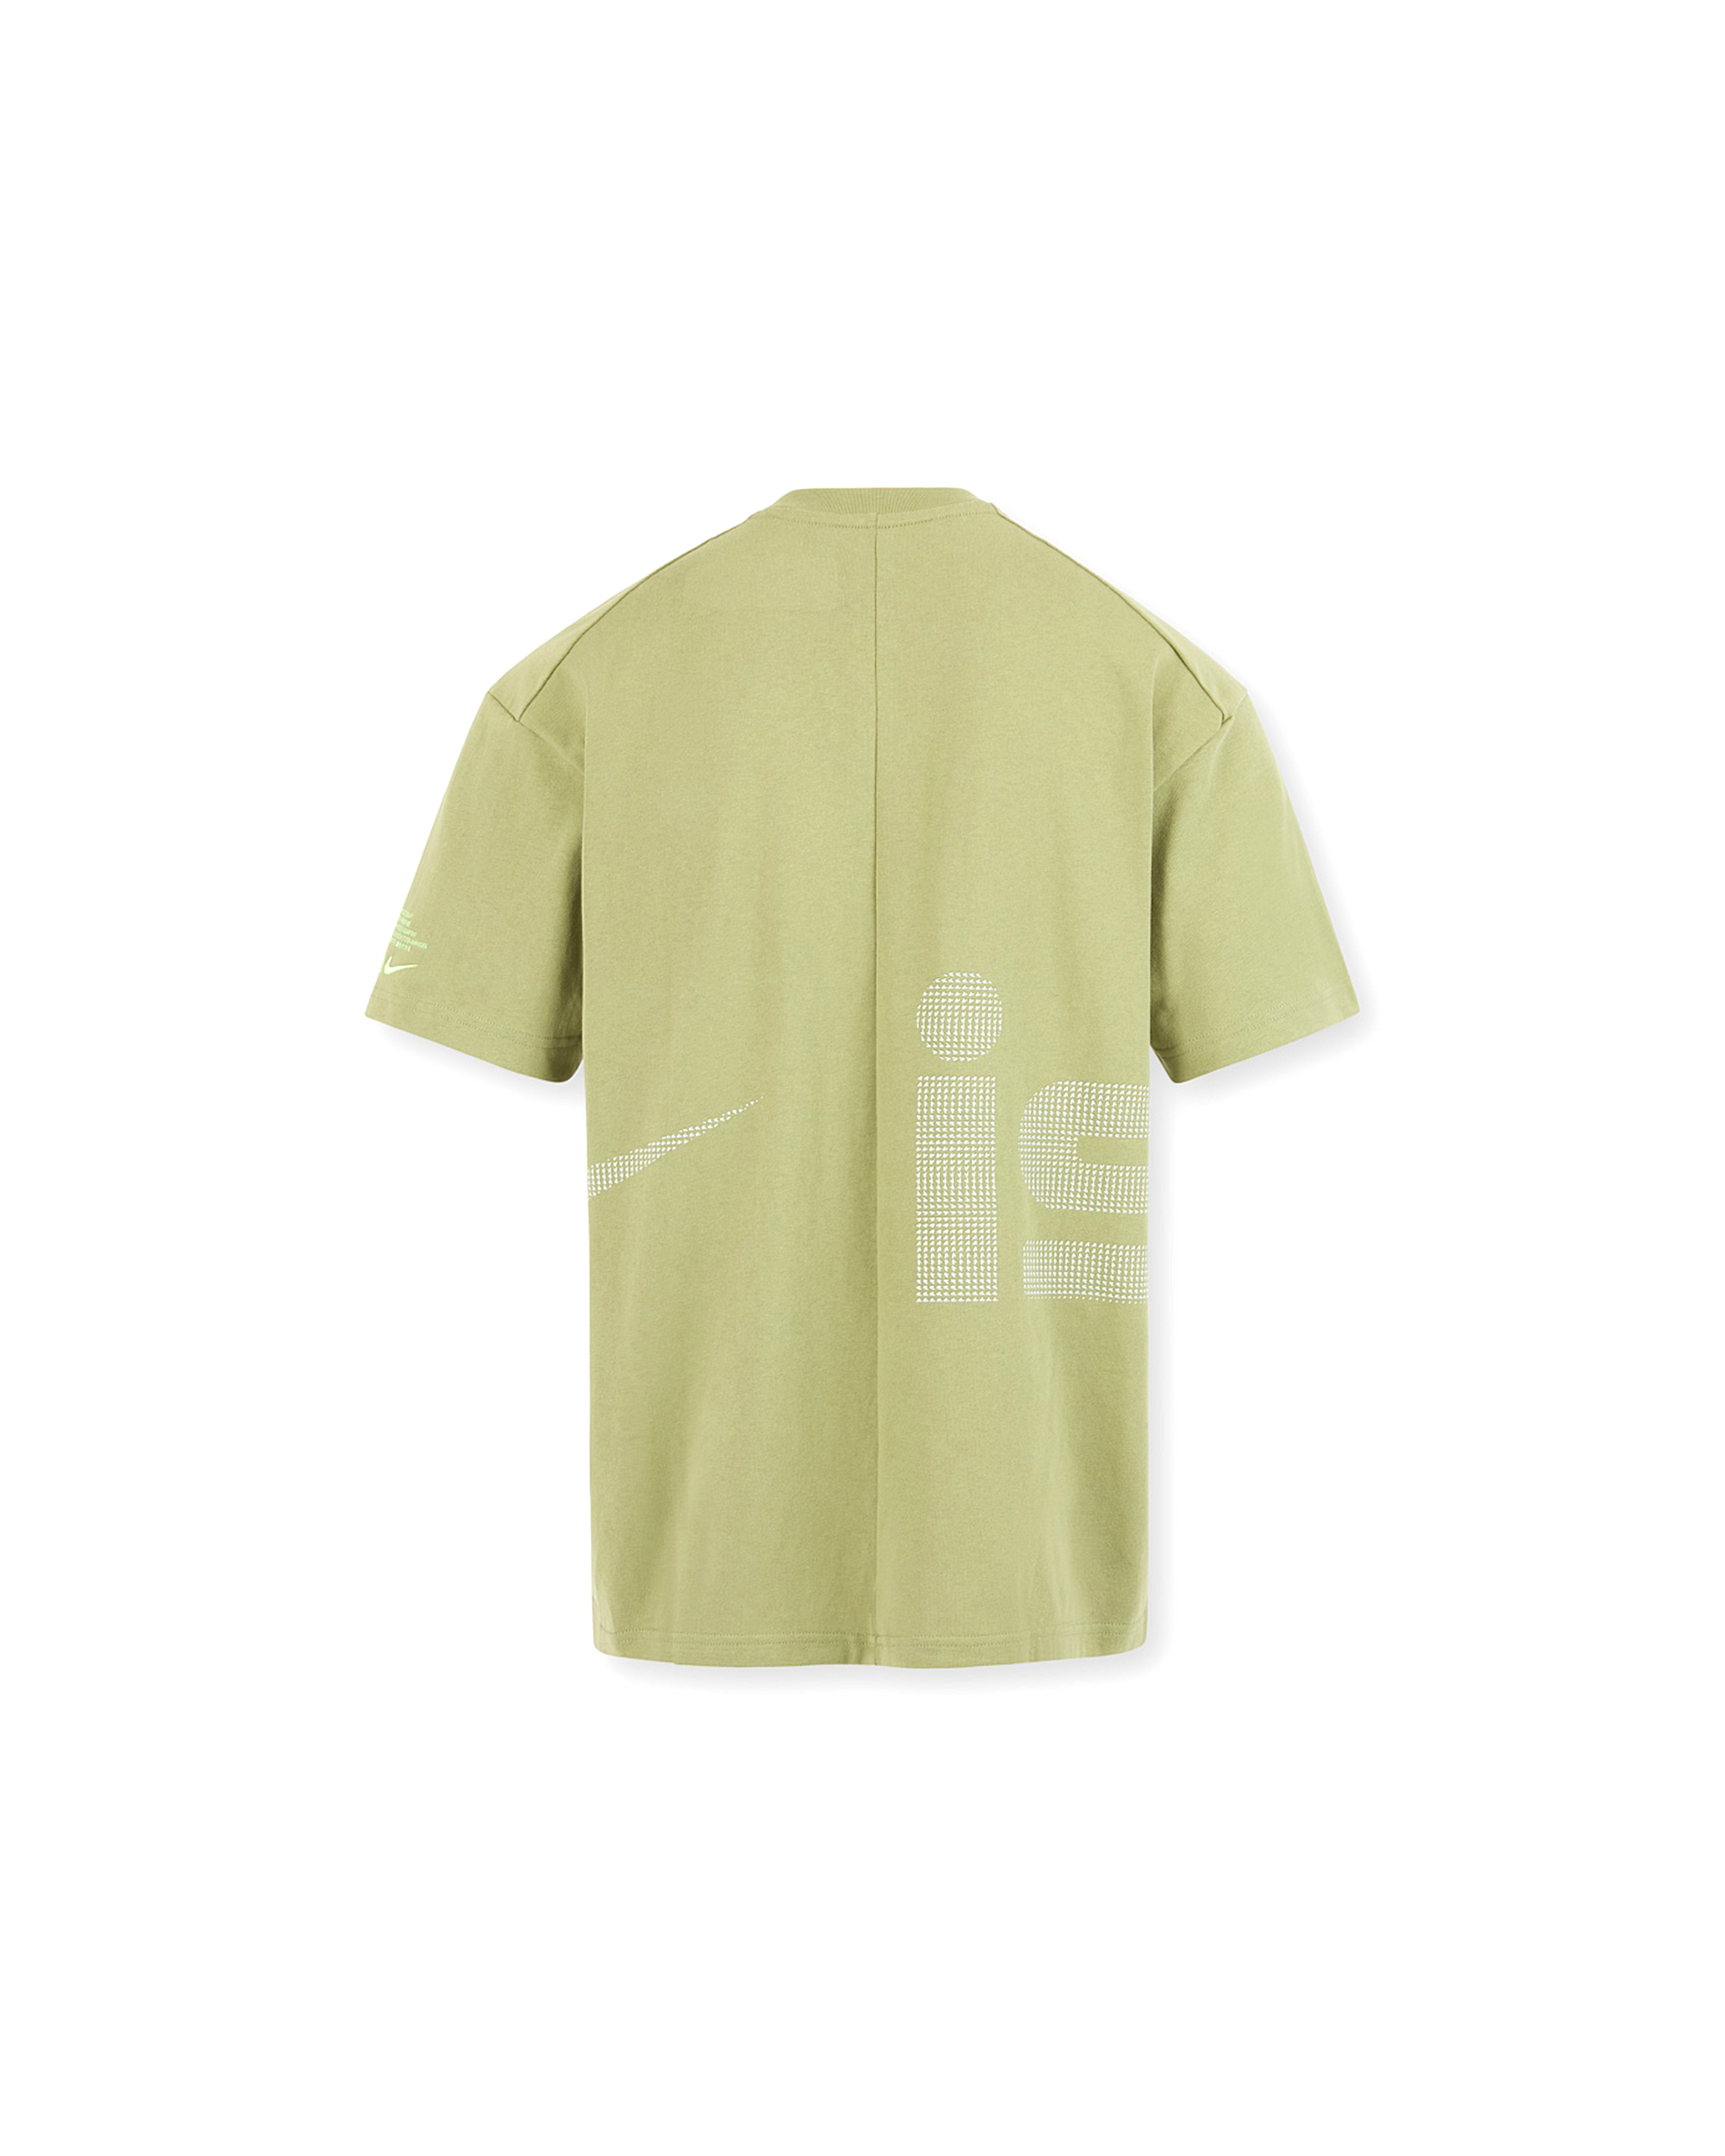 ISPA T-shirt - Alligator / Ghost Green / Silver